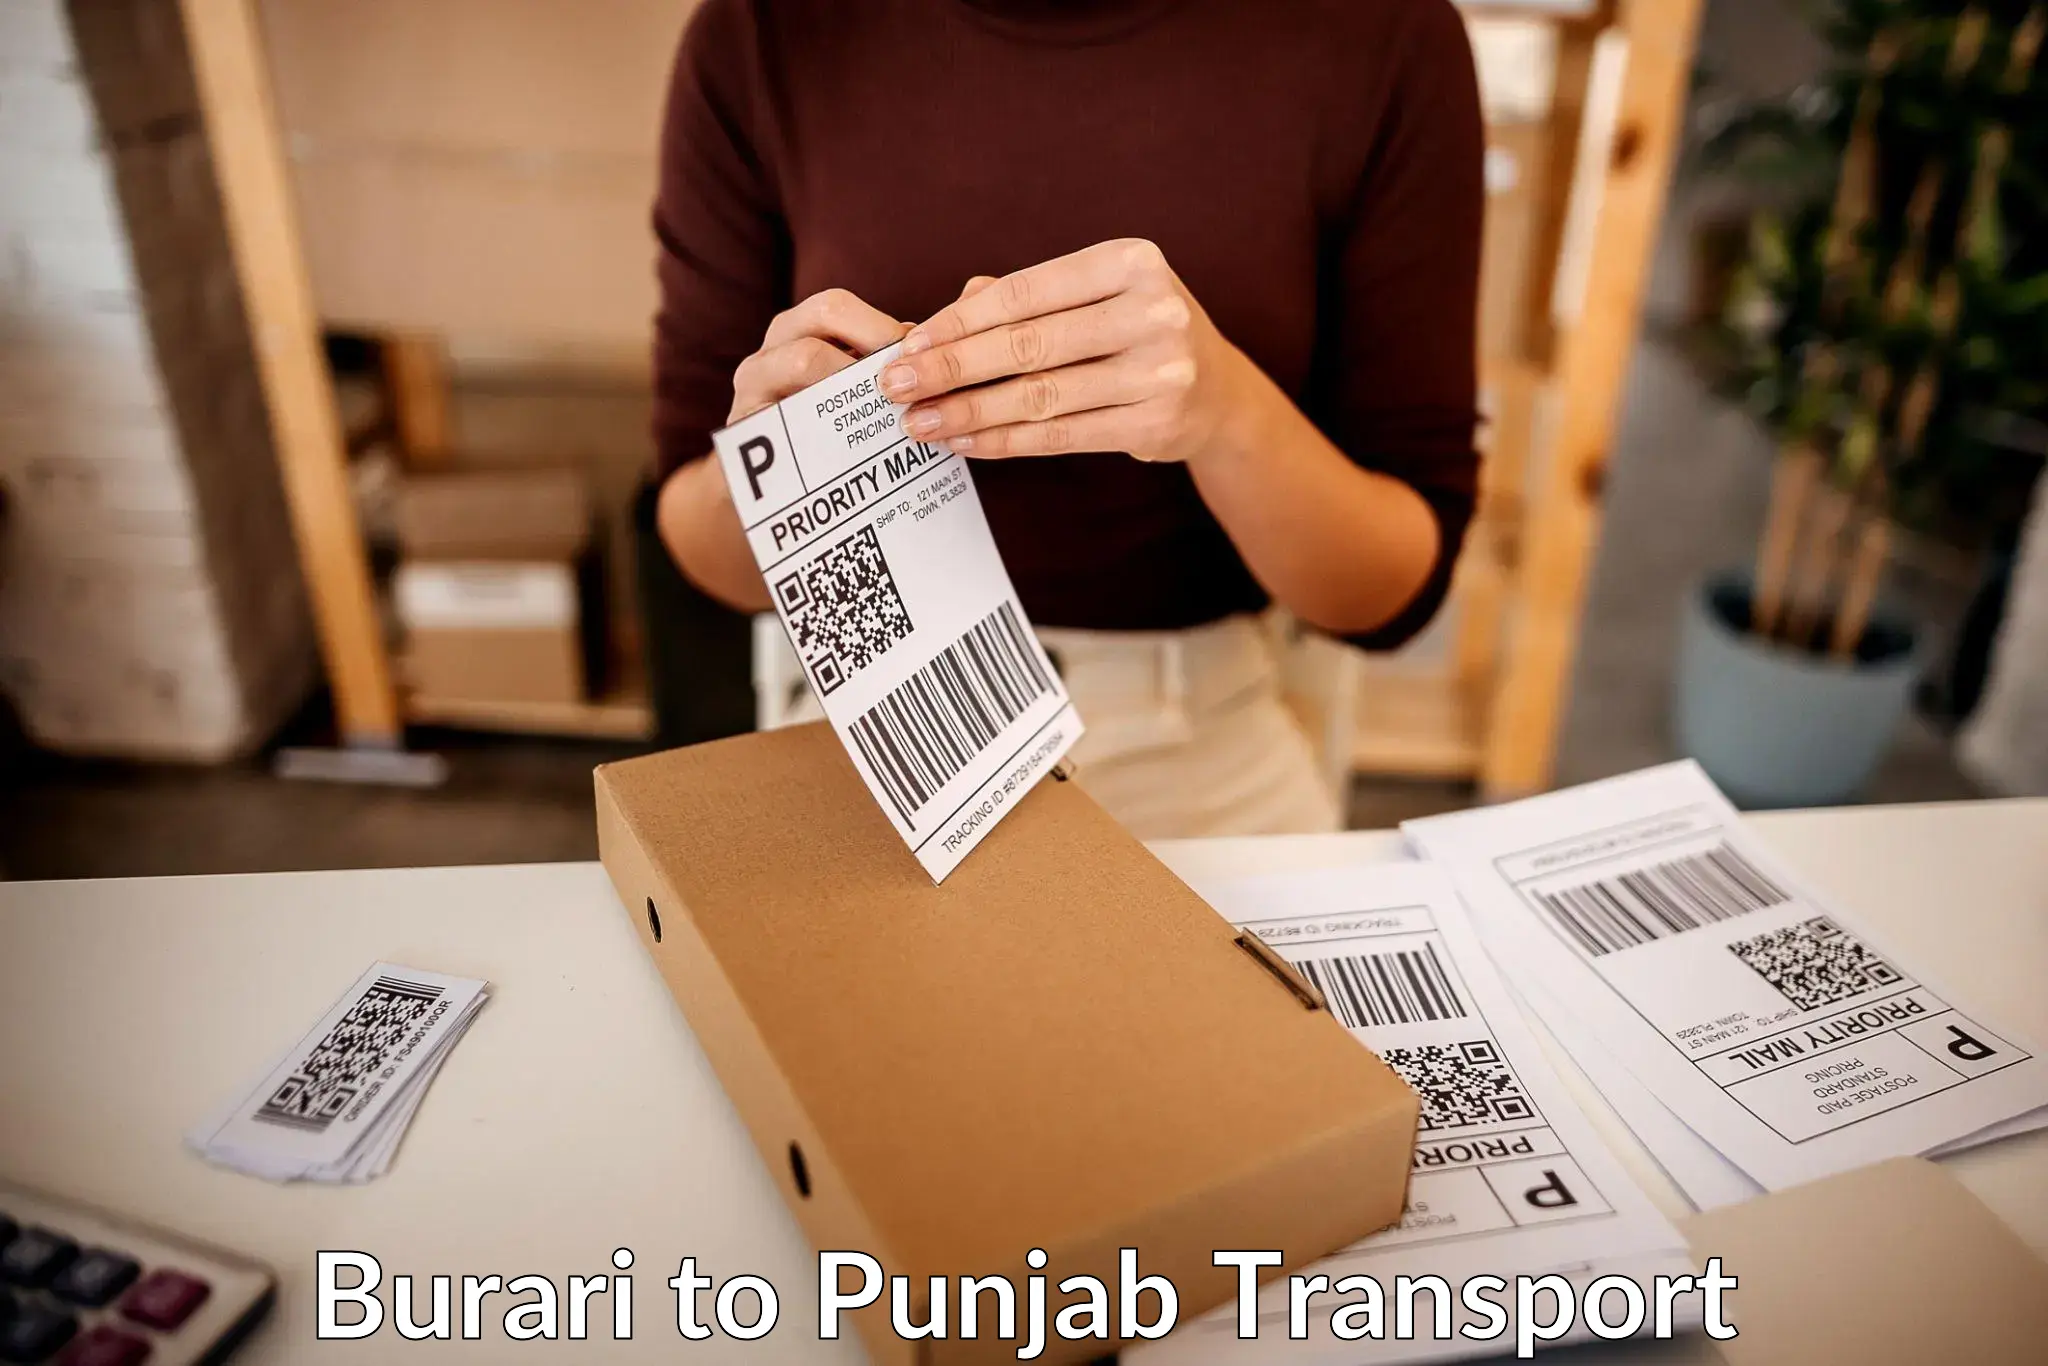 Truck transport companies in India Burari to Ludhiana